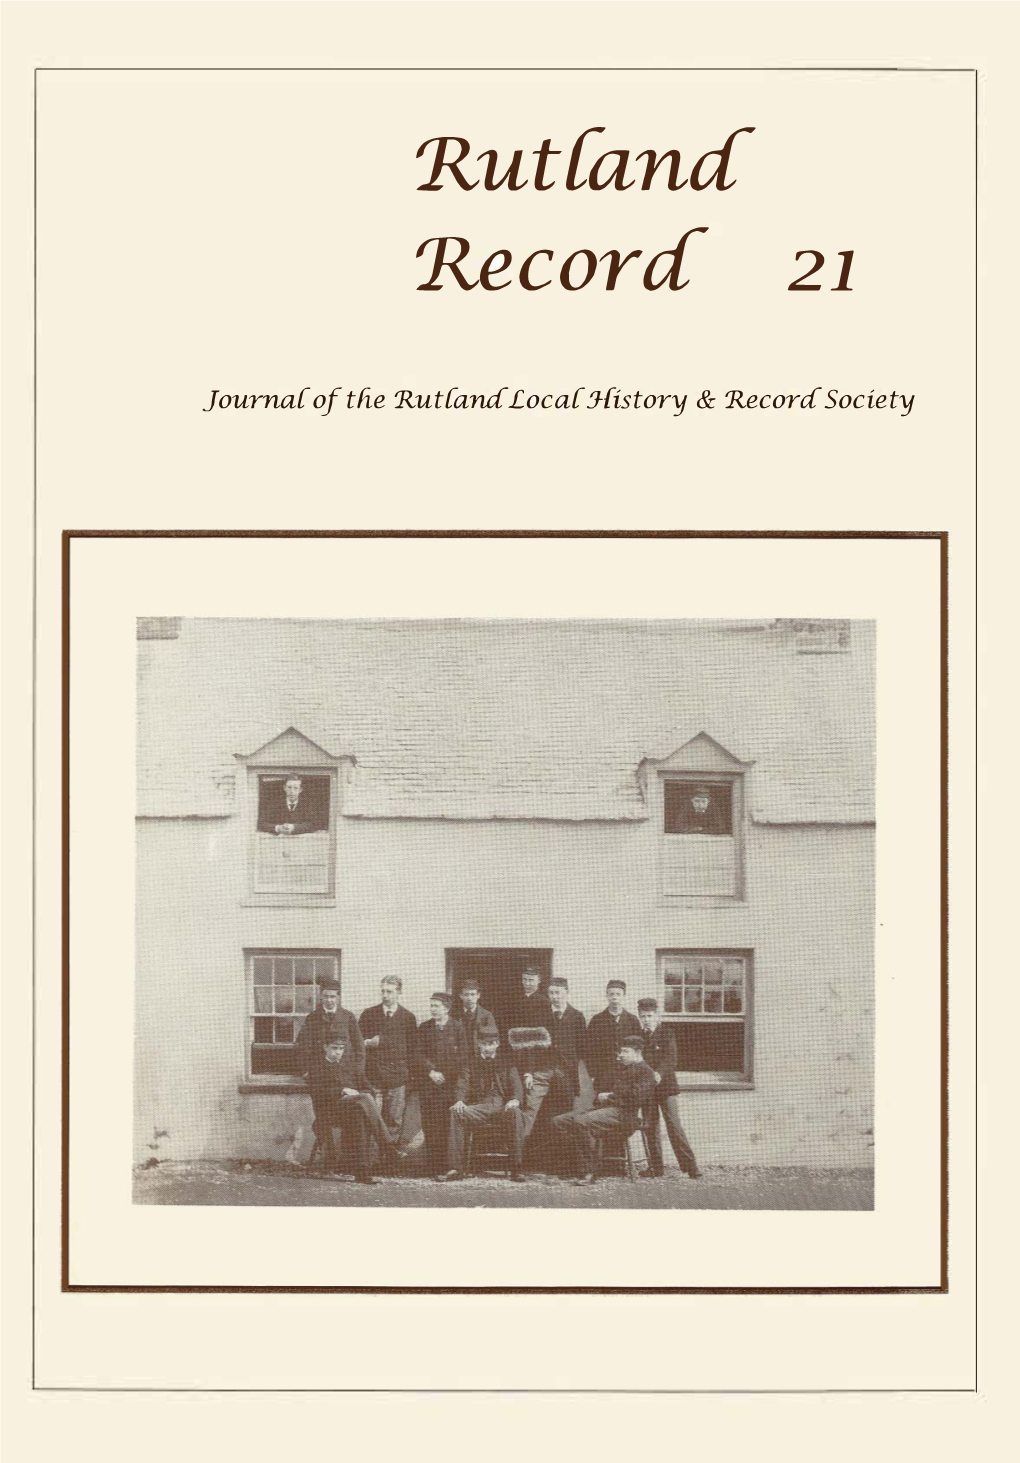 Rutland Record 21 (£3.50, Members £3.00) & St Anne in Okeham,By David Parkin (2000)